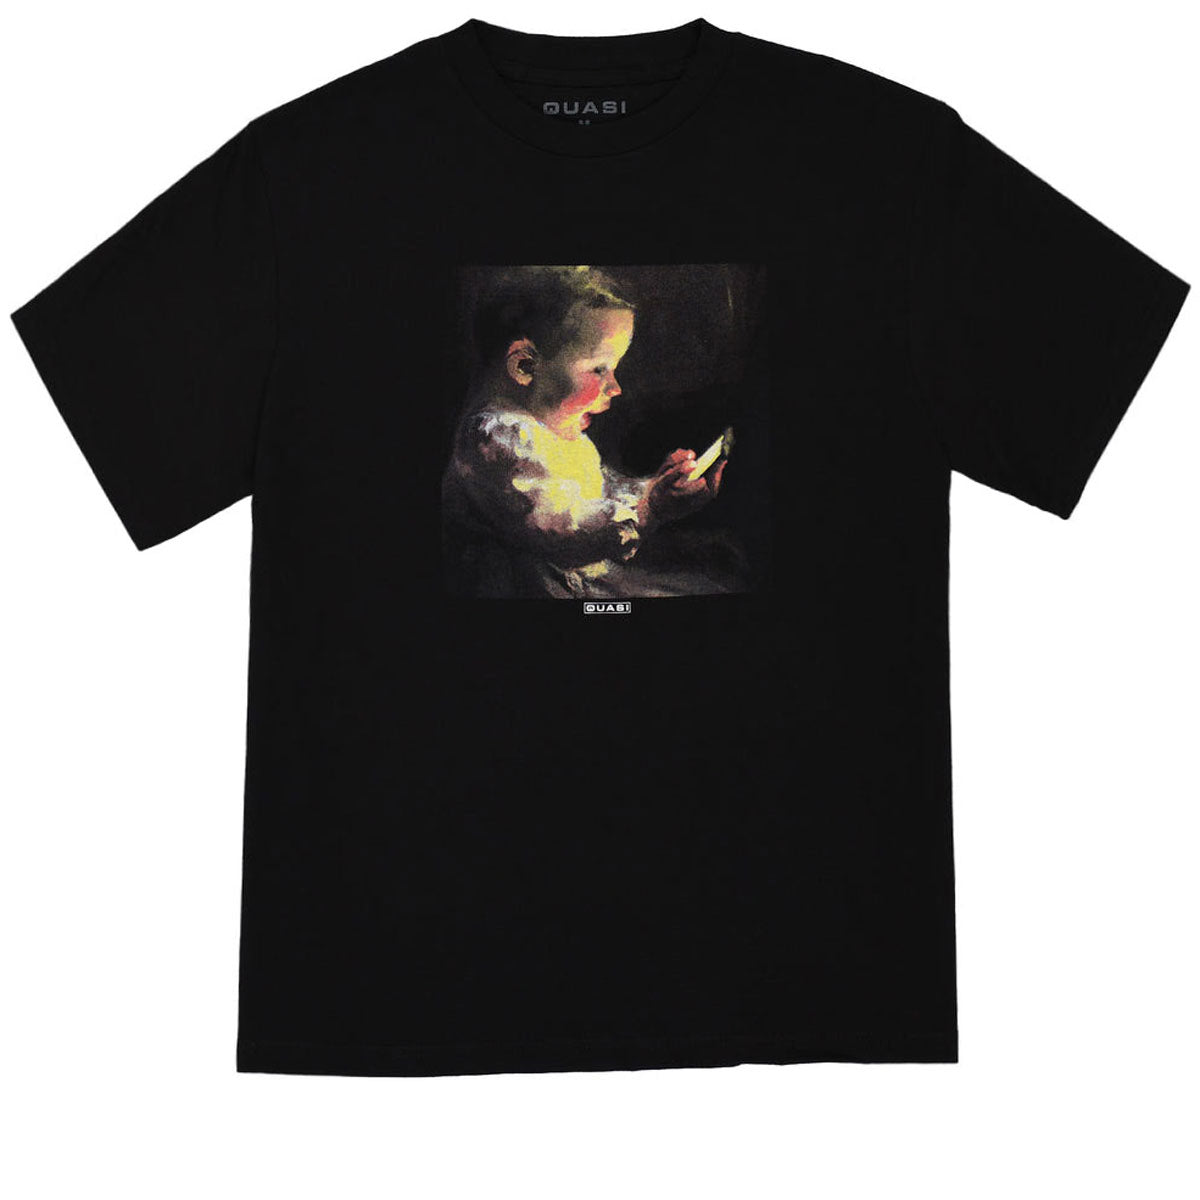 Quasi Child T-Shirt - Black image 1